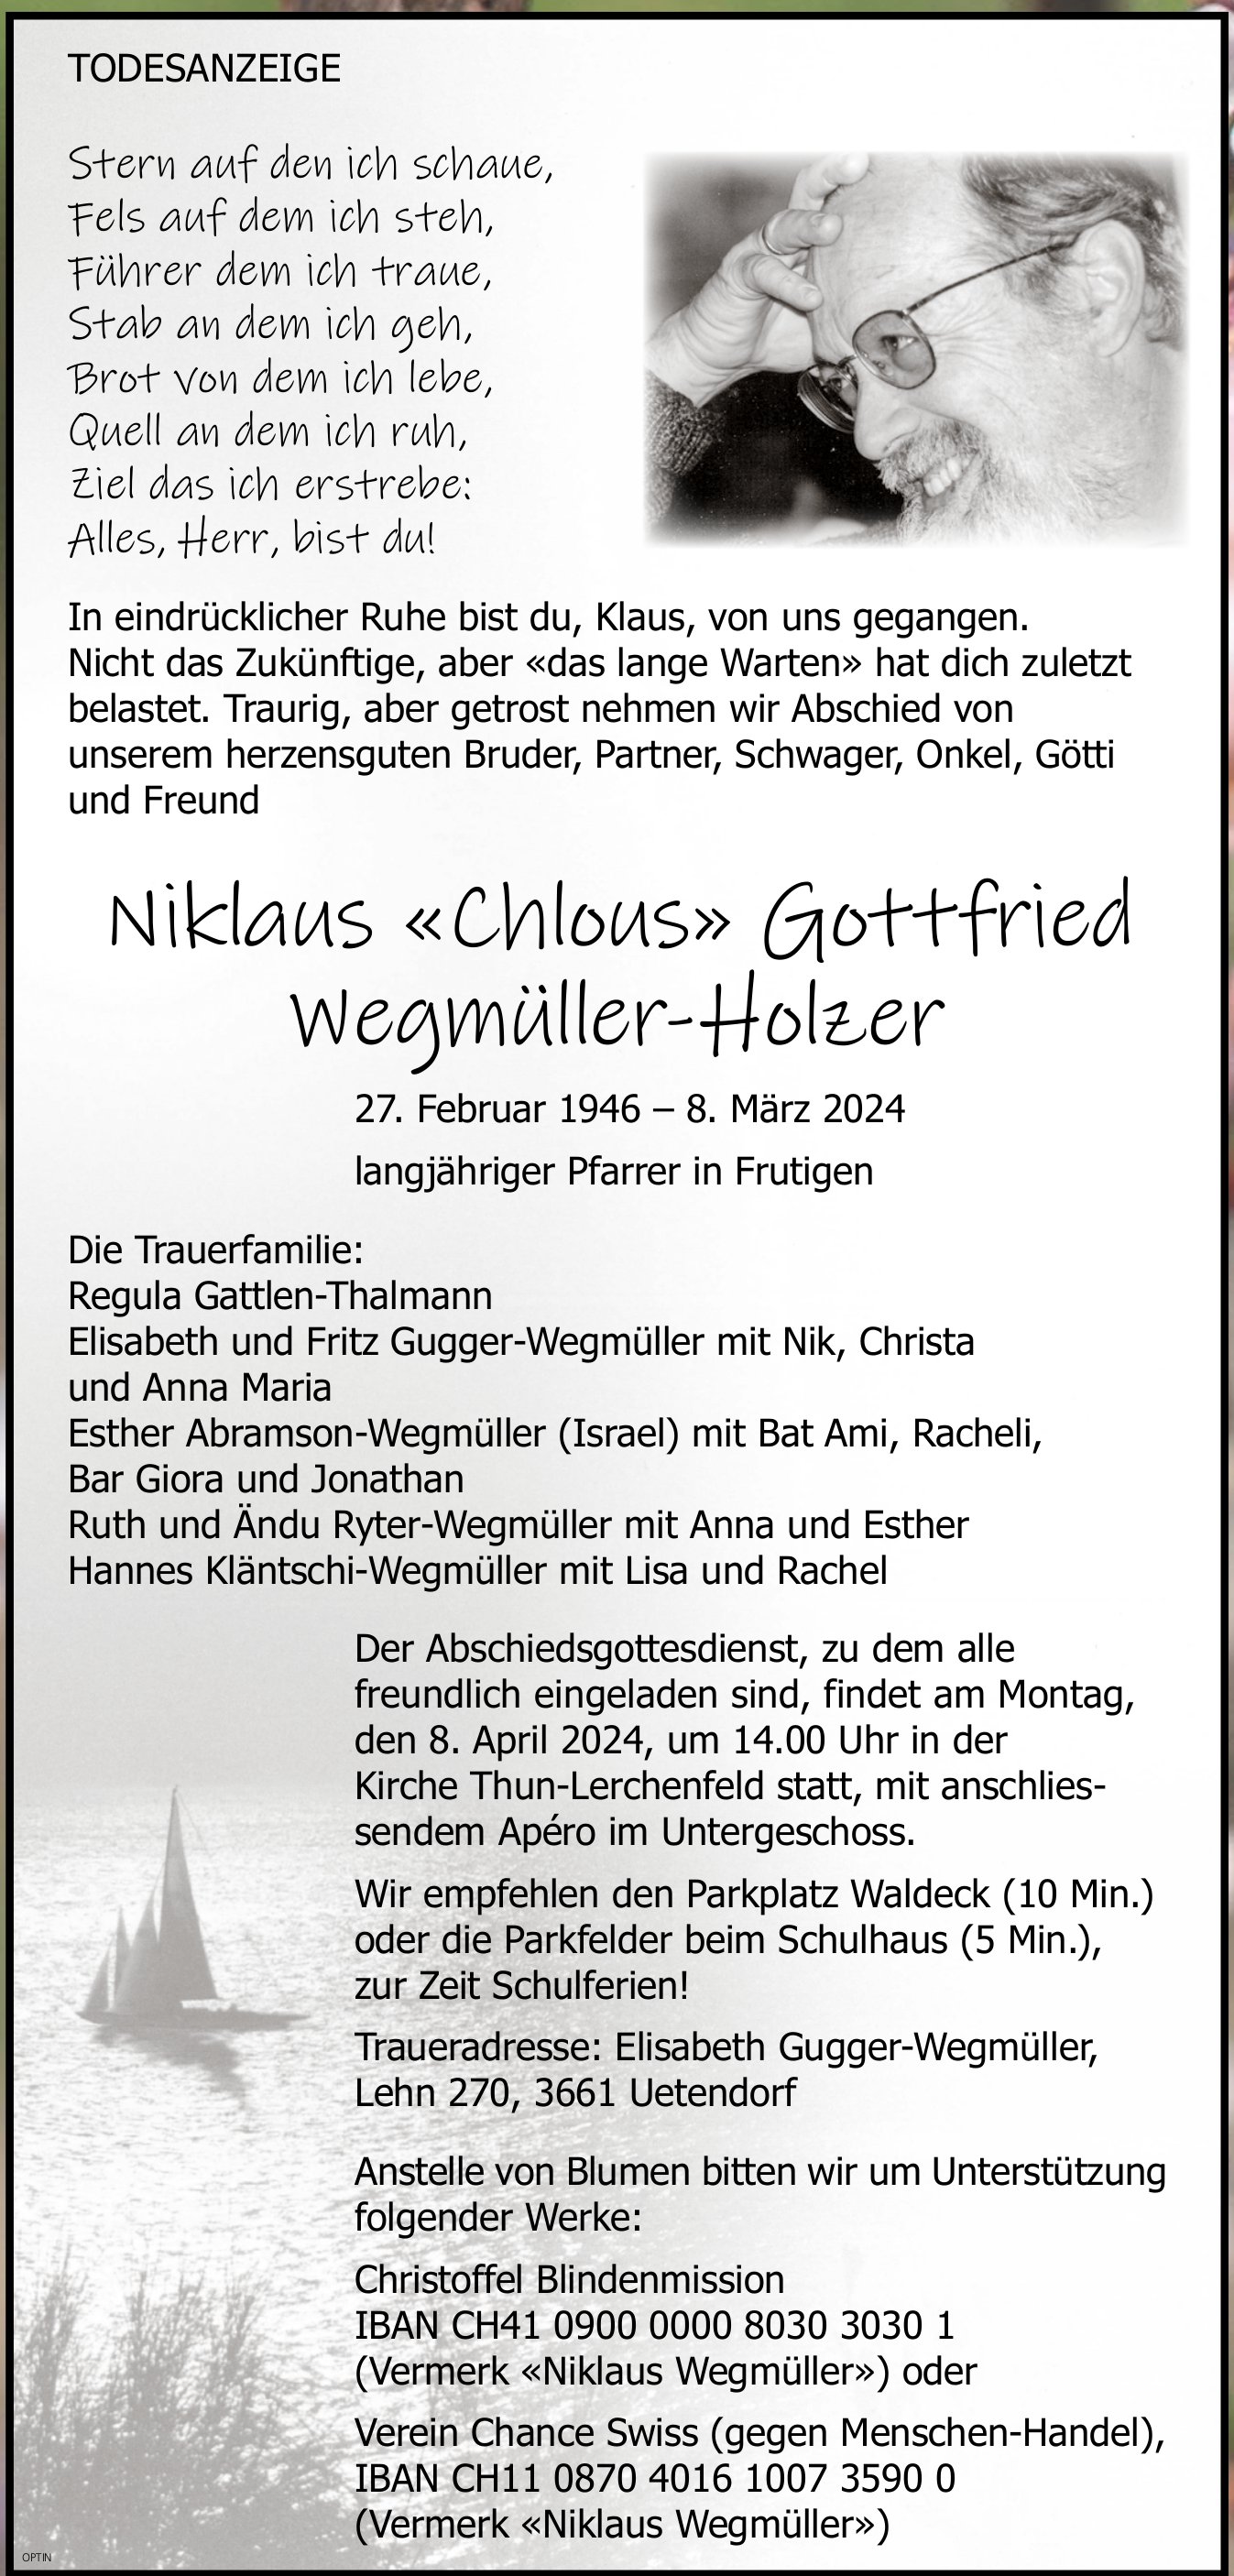 Niklaus «Chlous» Gottfried Wegmüller-Holzer, März 2024 / TA